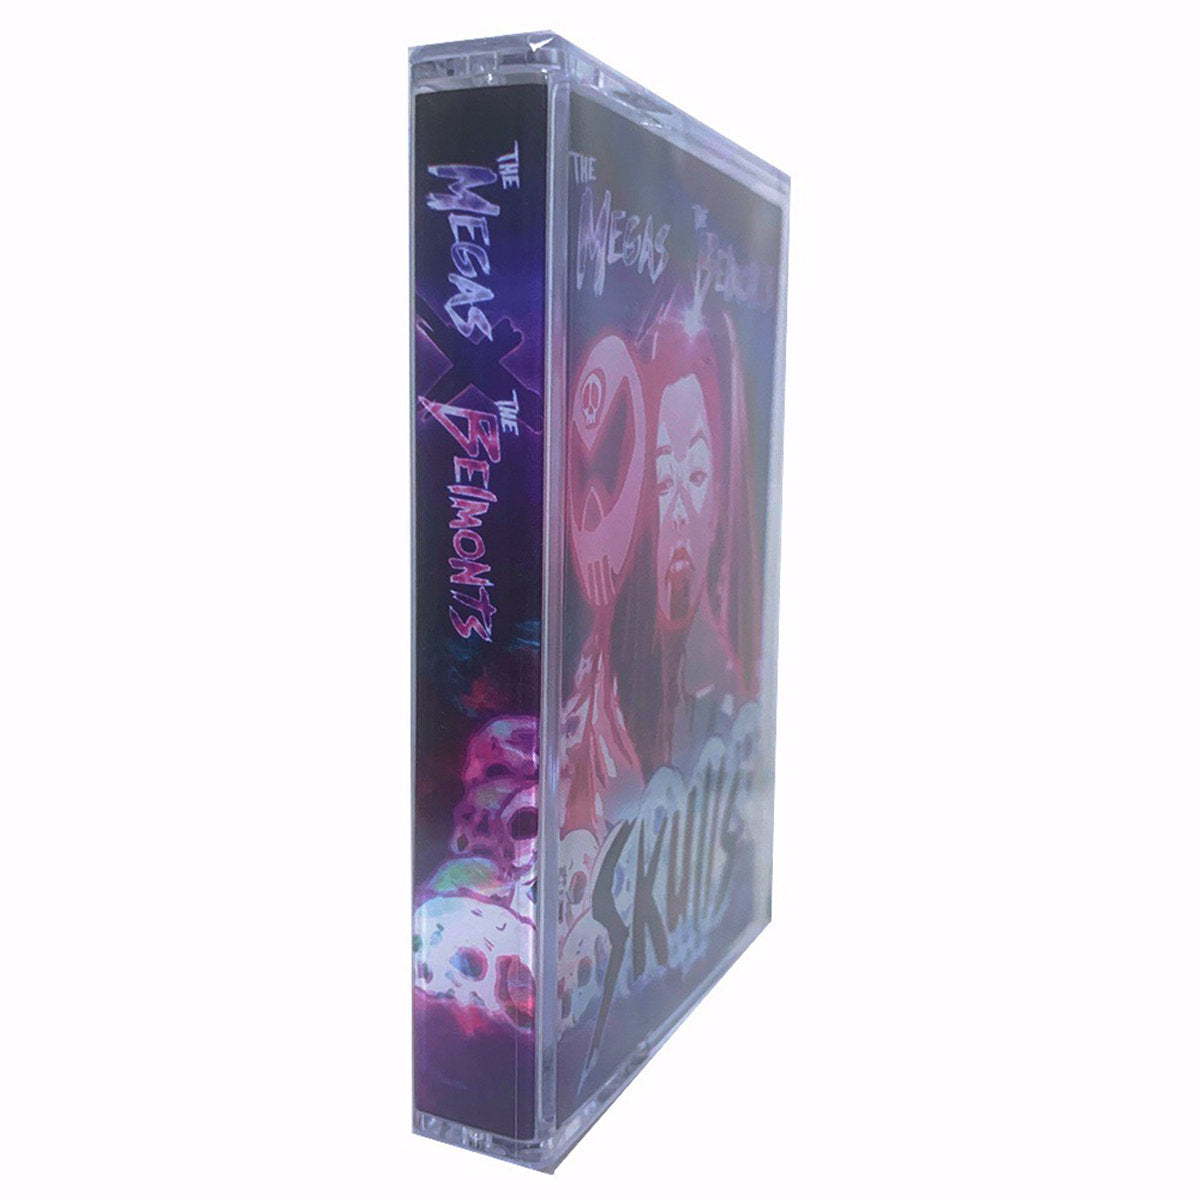 Skulls - Limited Edition Cassette